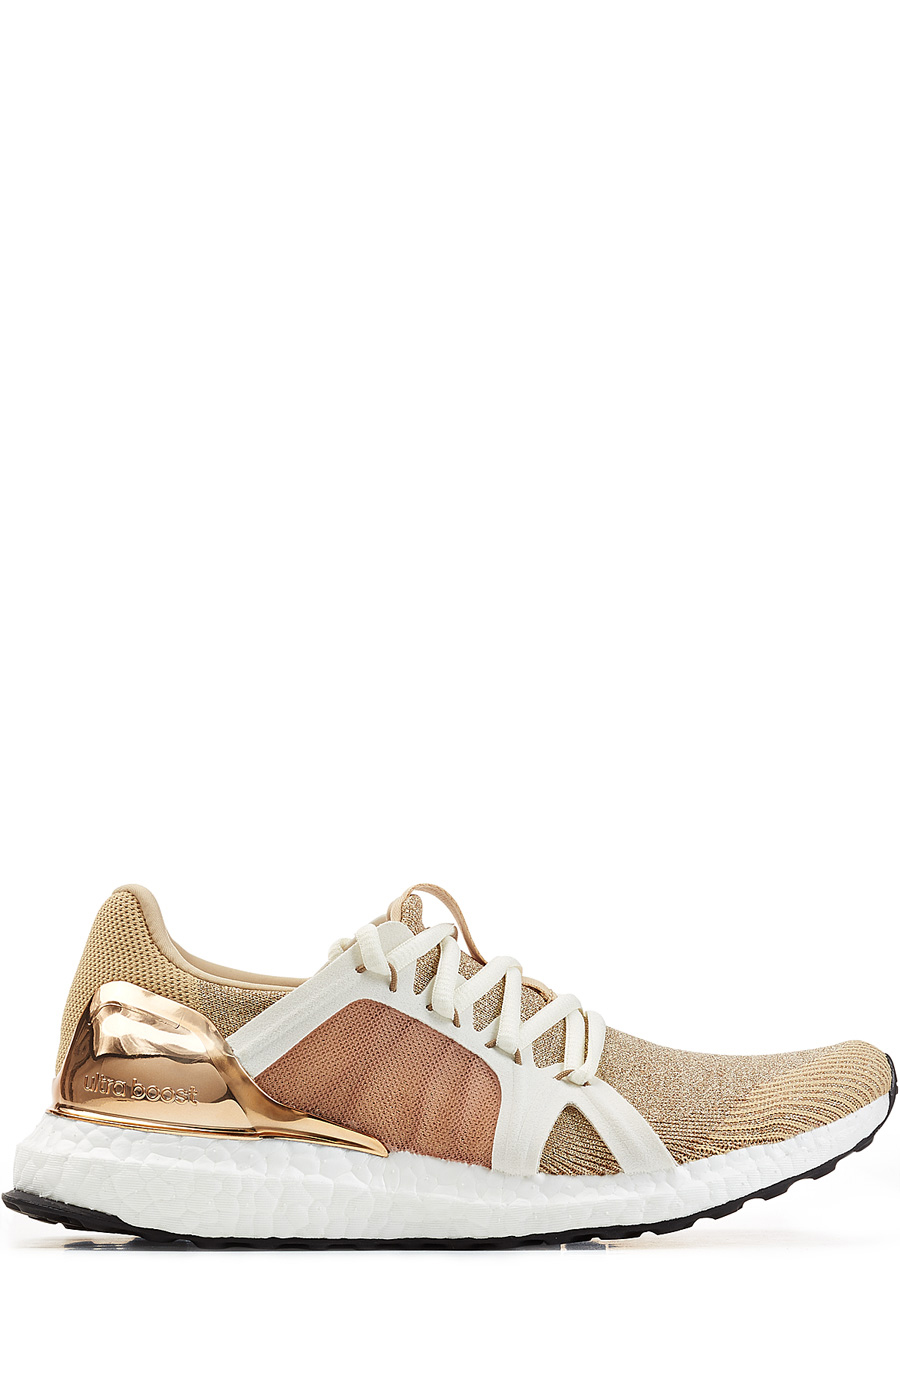 Adidas Originals Ultra Boost Sparkle Knit Sneaker, Copper/white | ModeSens